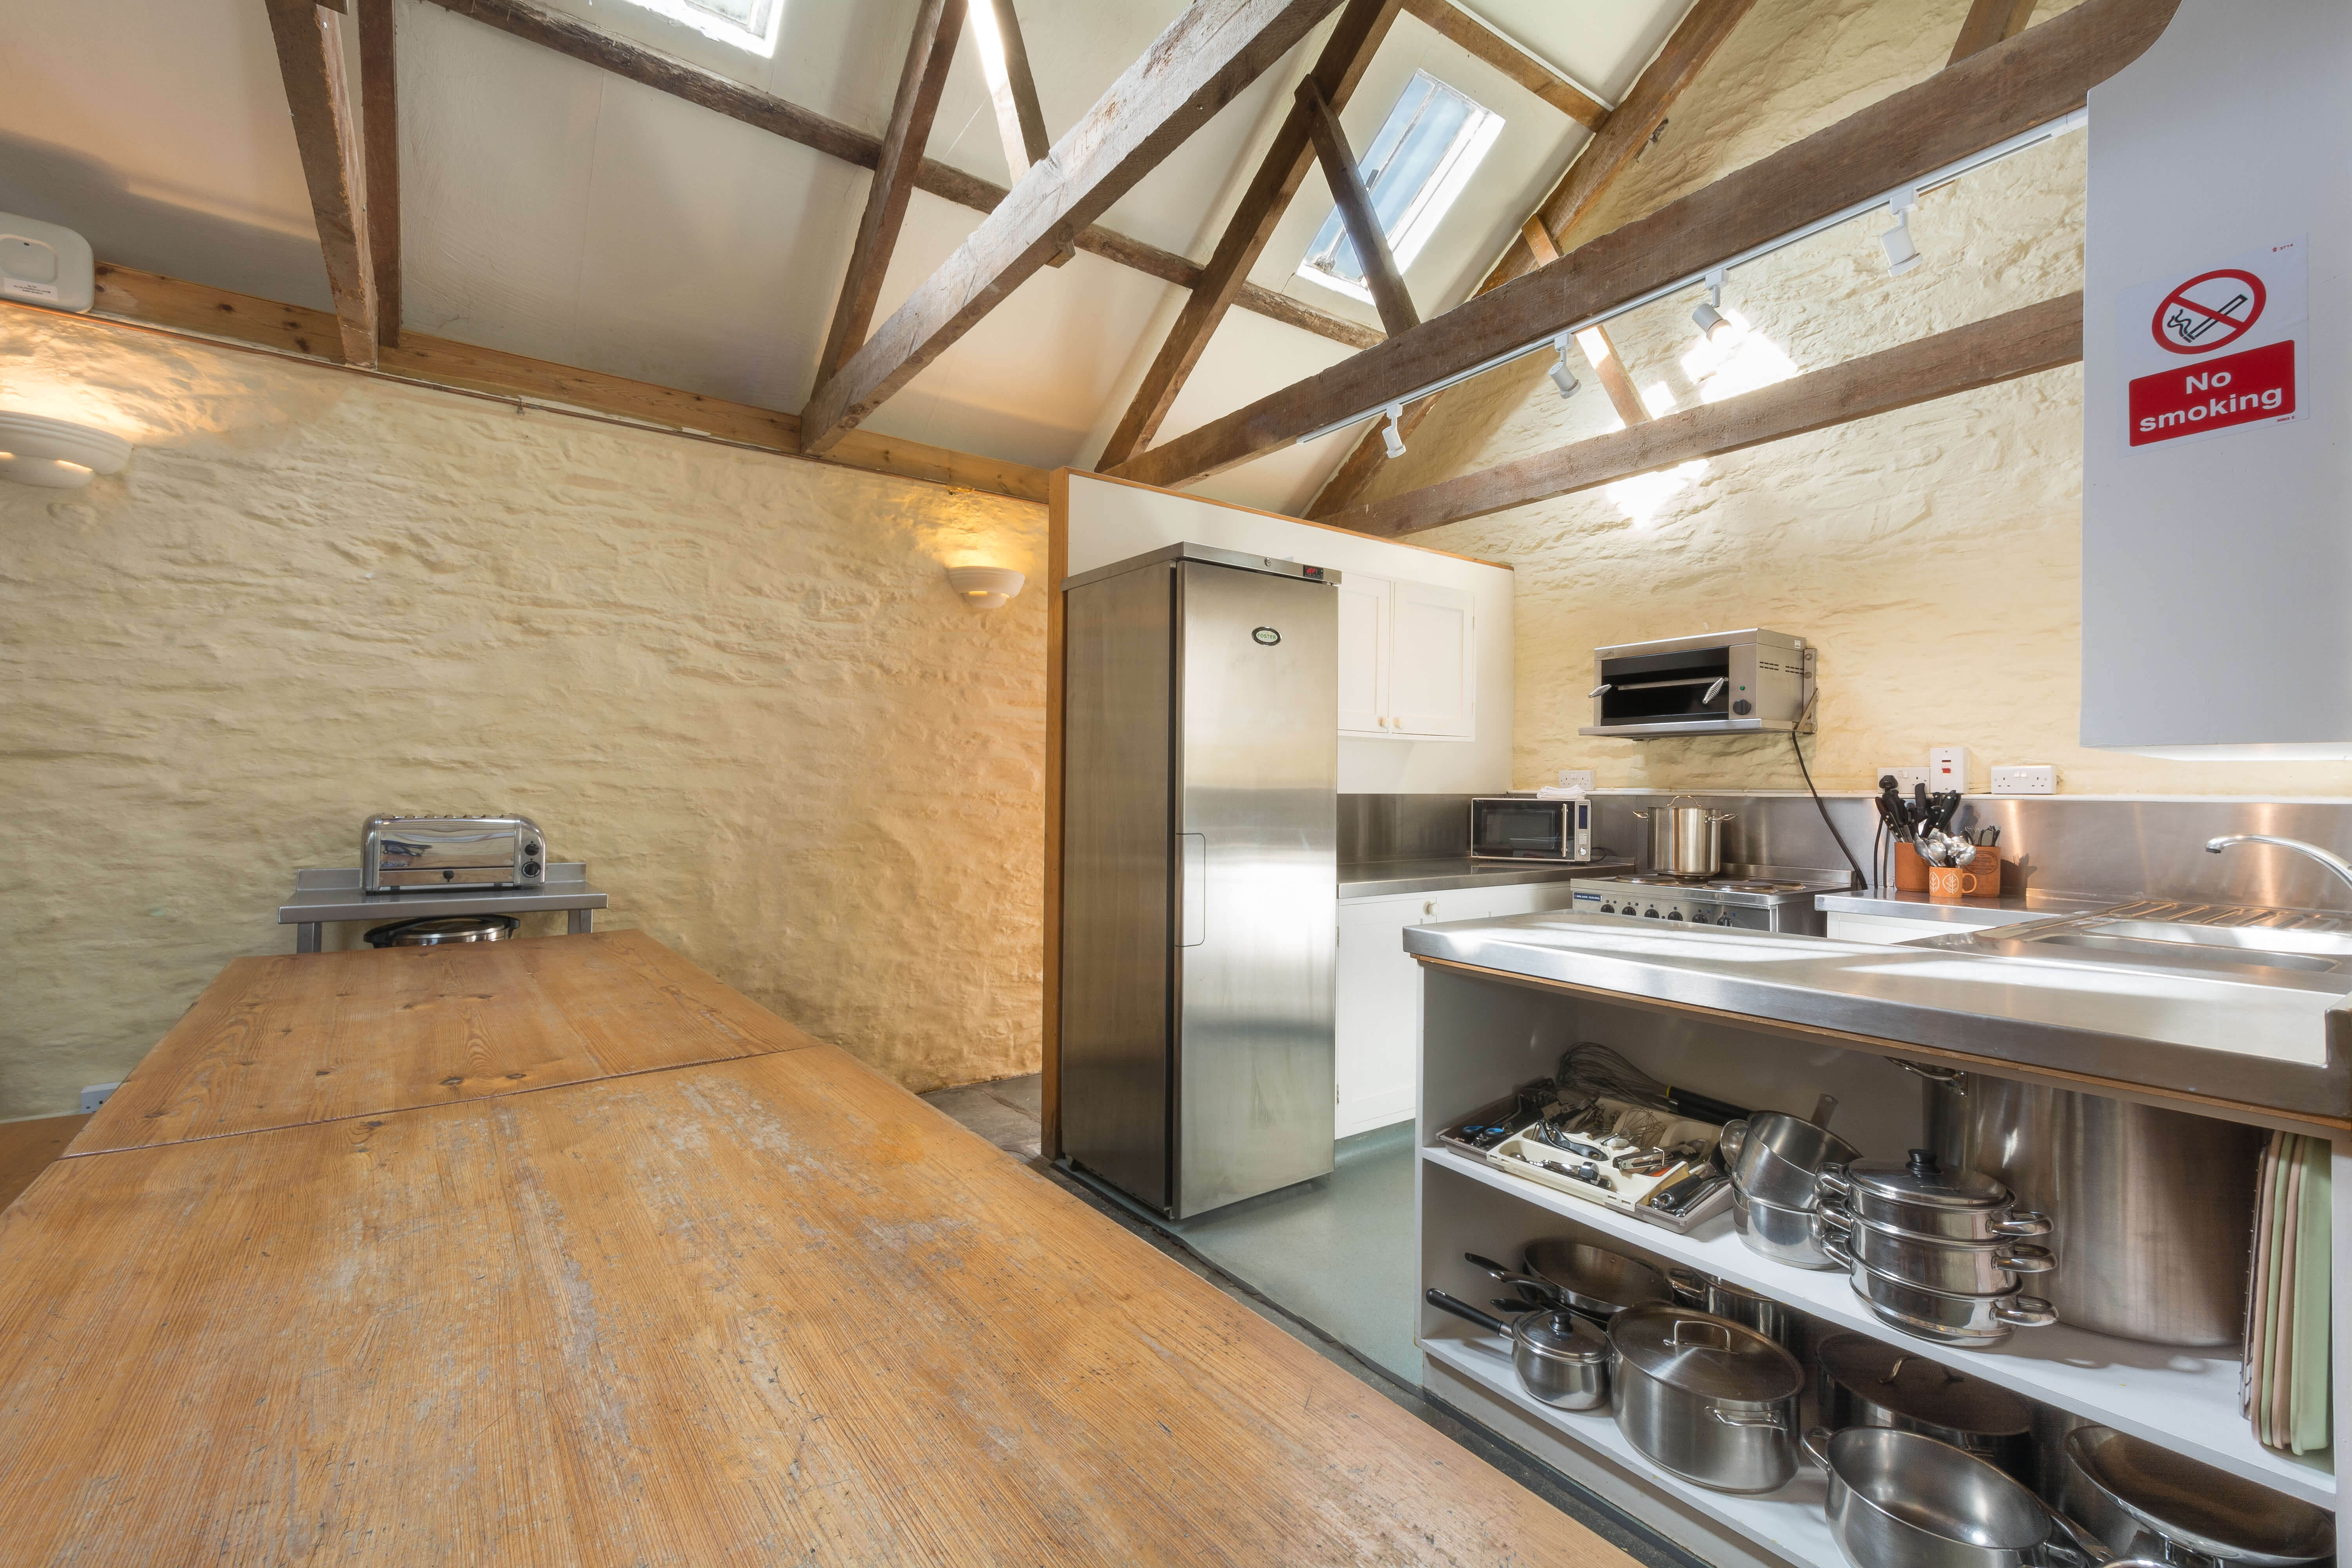 National Trust - Penrose Bunkhouse - kitchen area